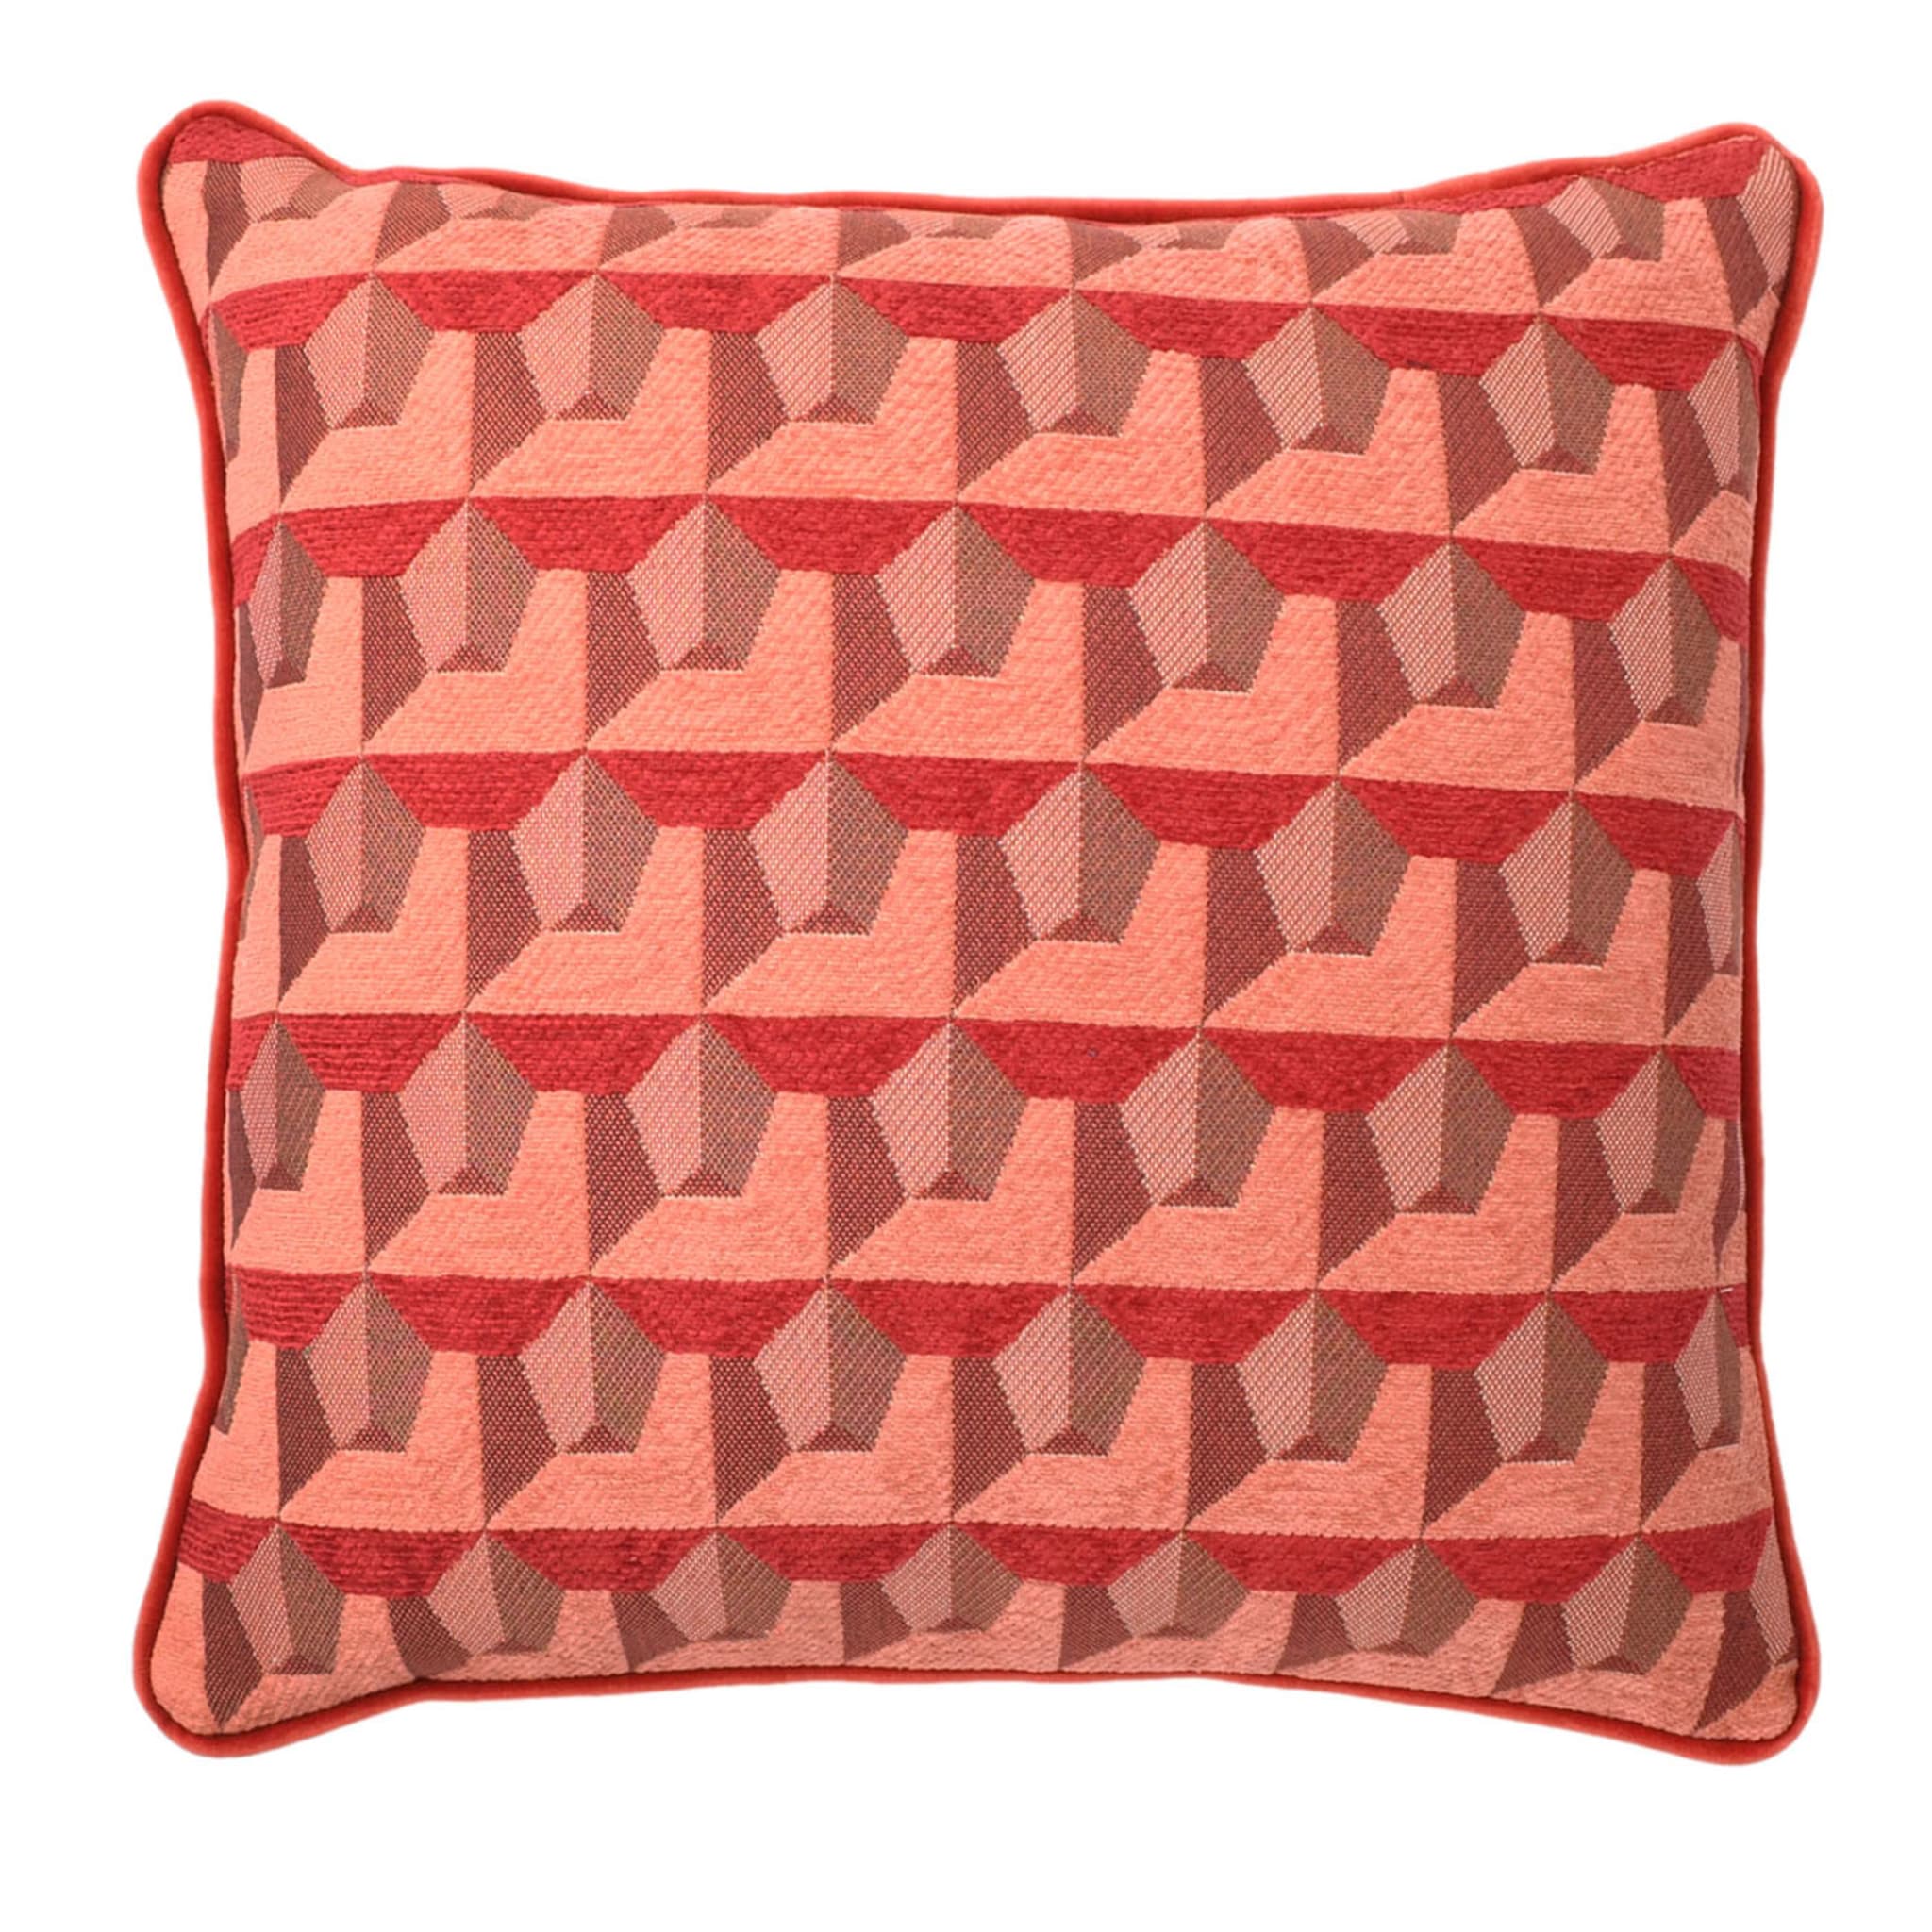 Carrè Cushion In Geometric Relief Jacquard Fabric #1 - Main view